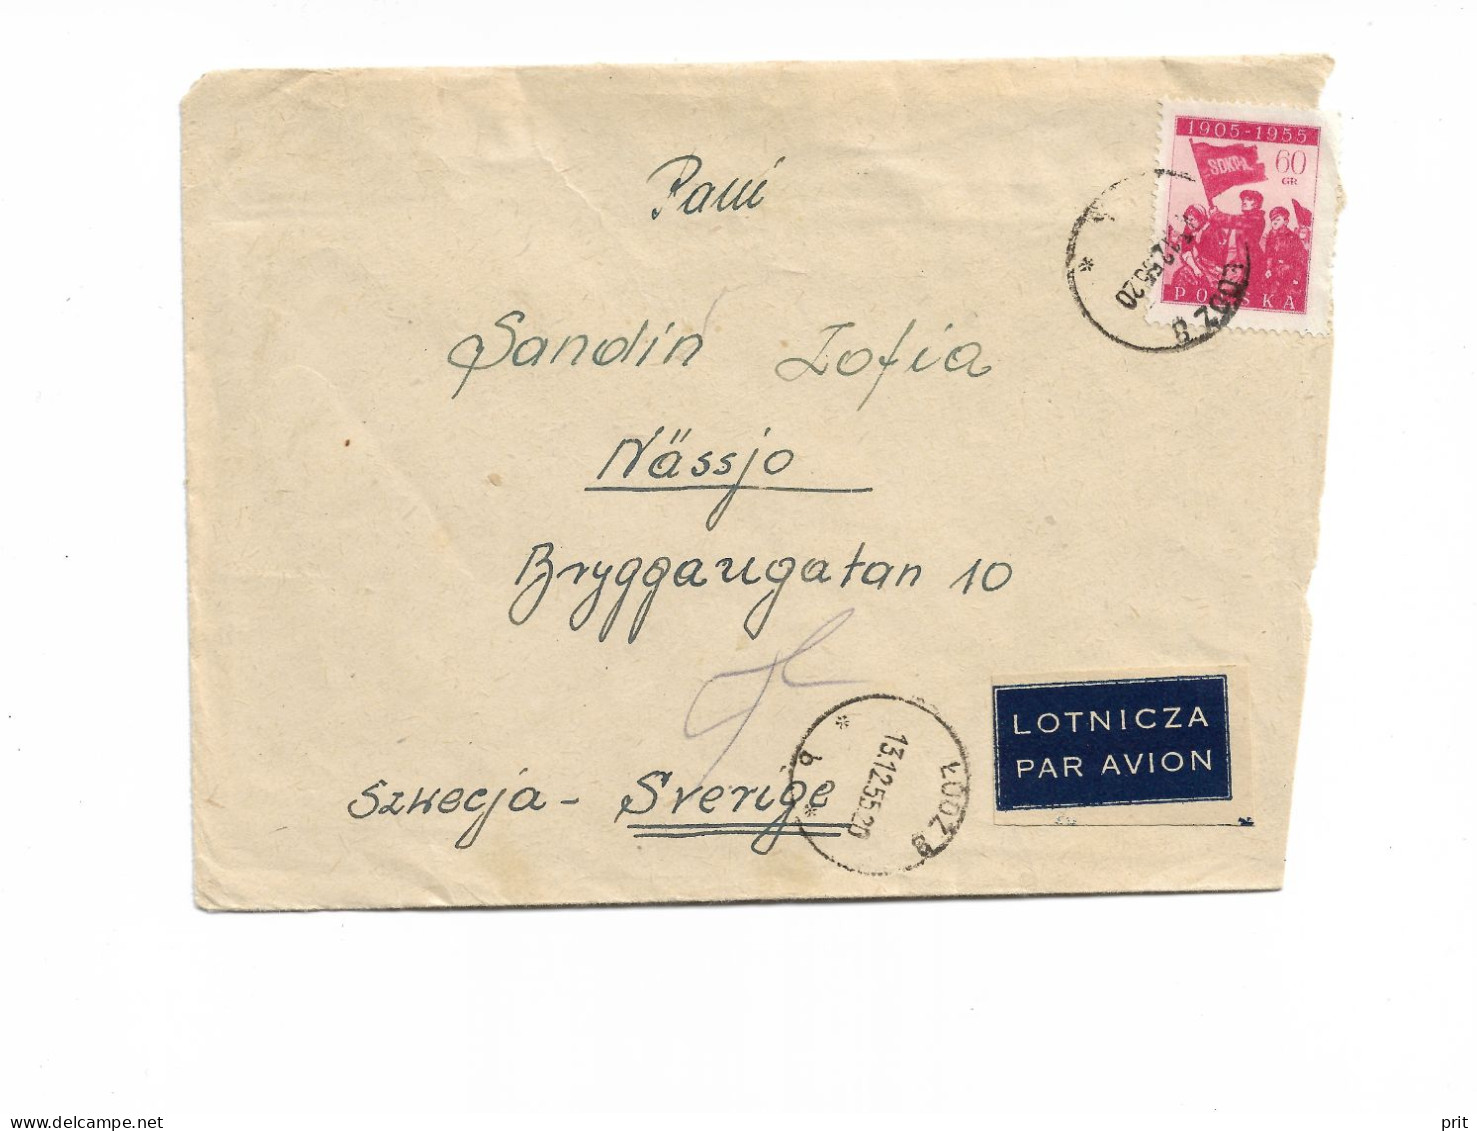 Łódź, Poland Polish People's Republic Airmail Cover To Nässjö, Sweden 1955 - Briefe U. Dokumente